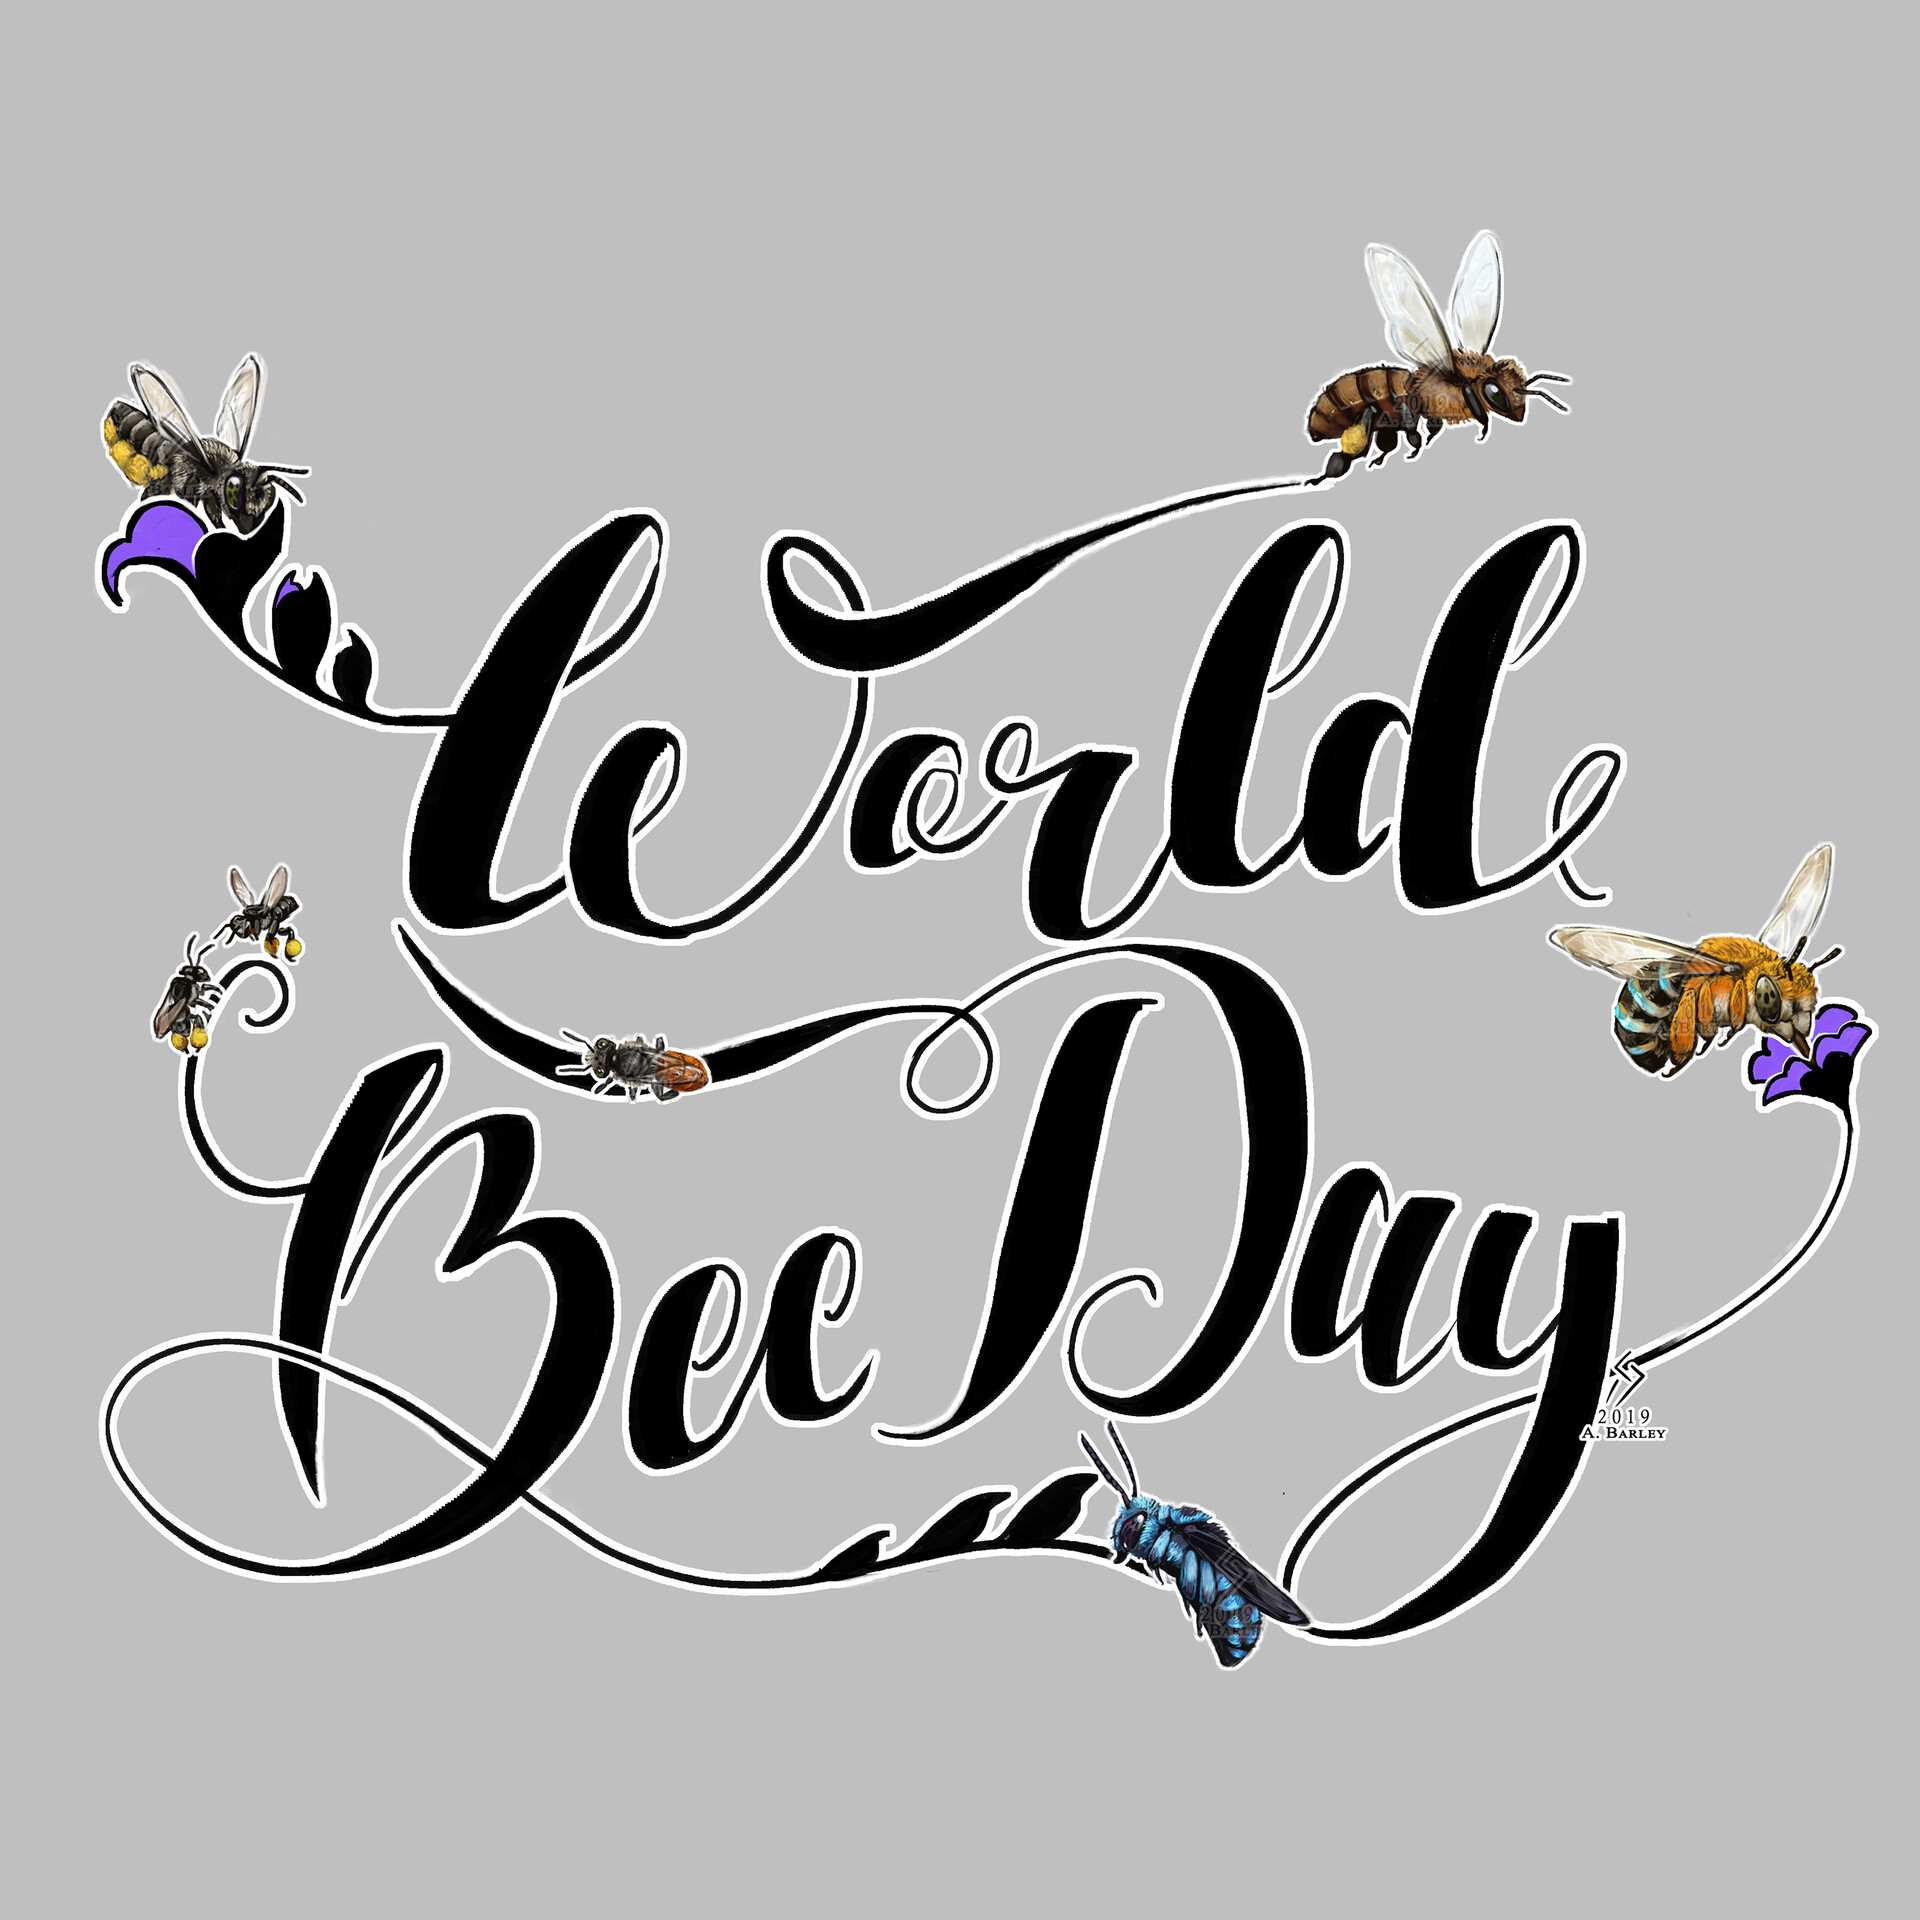 artstation-world-bee-day-may-20th